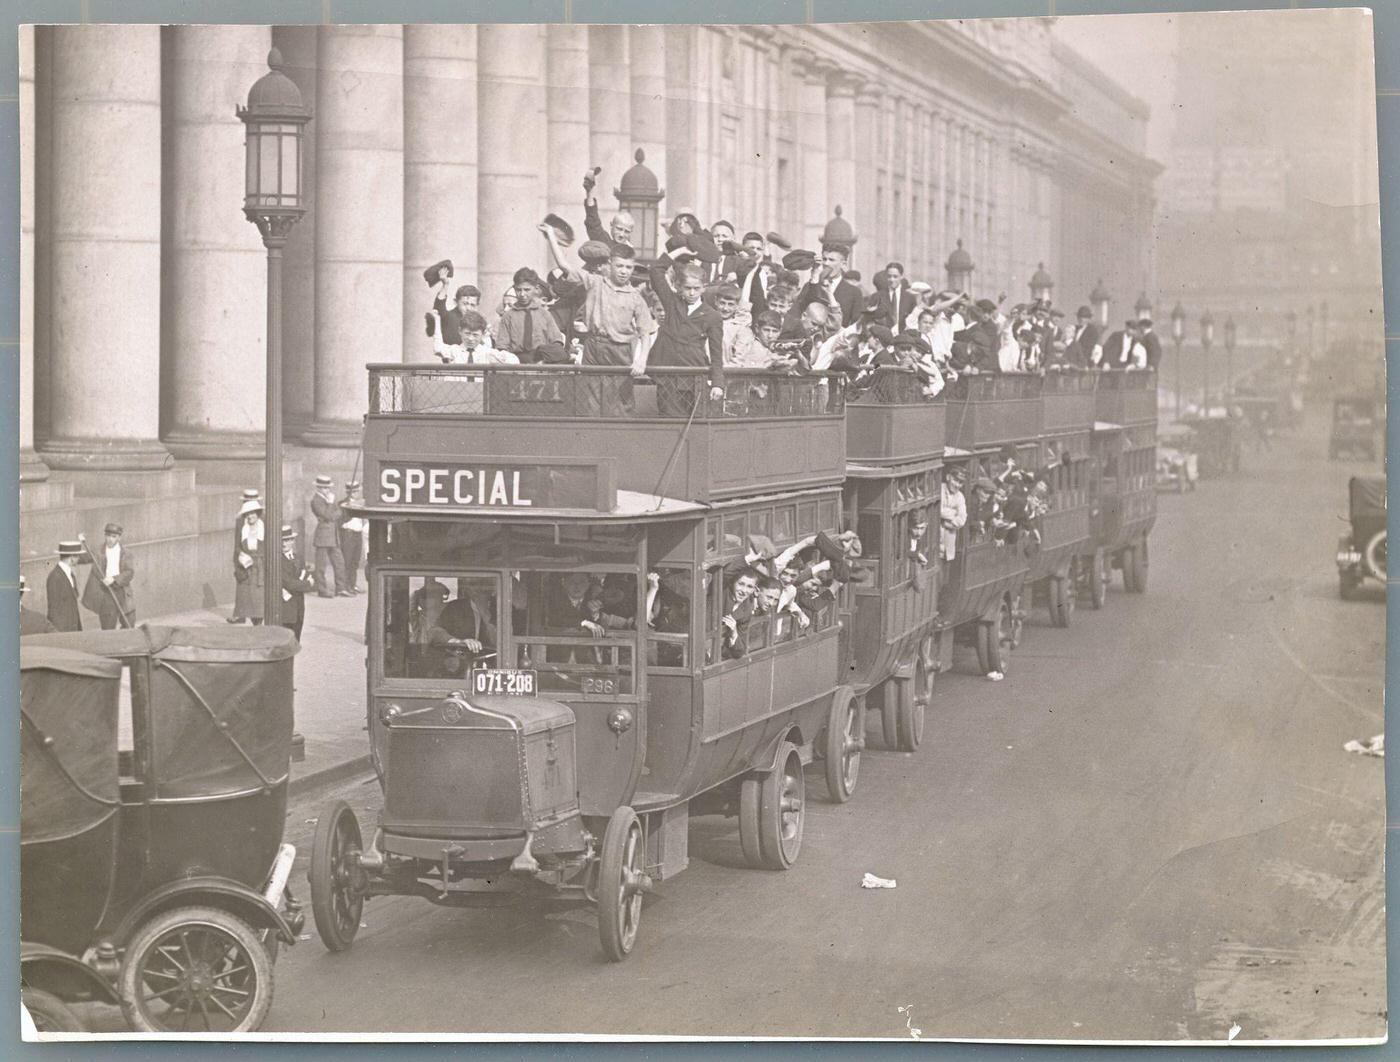 School Boys Riding In Double Decker Bus Passing Pennsylvania Station, Manhattan, 1920S.